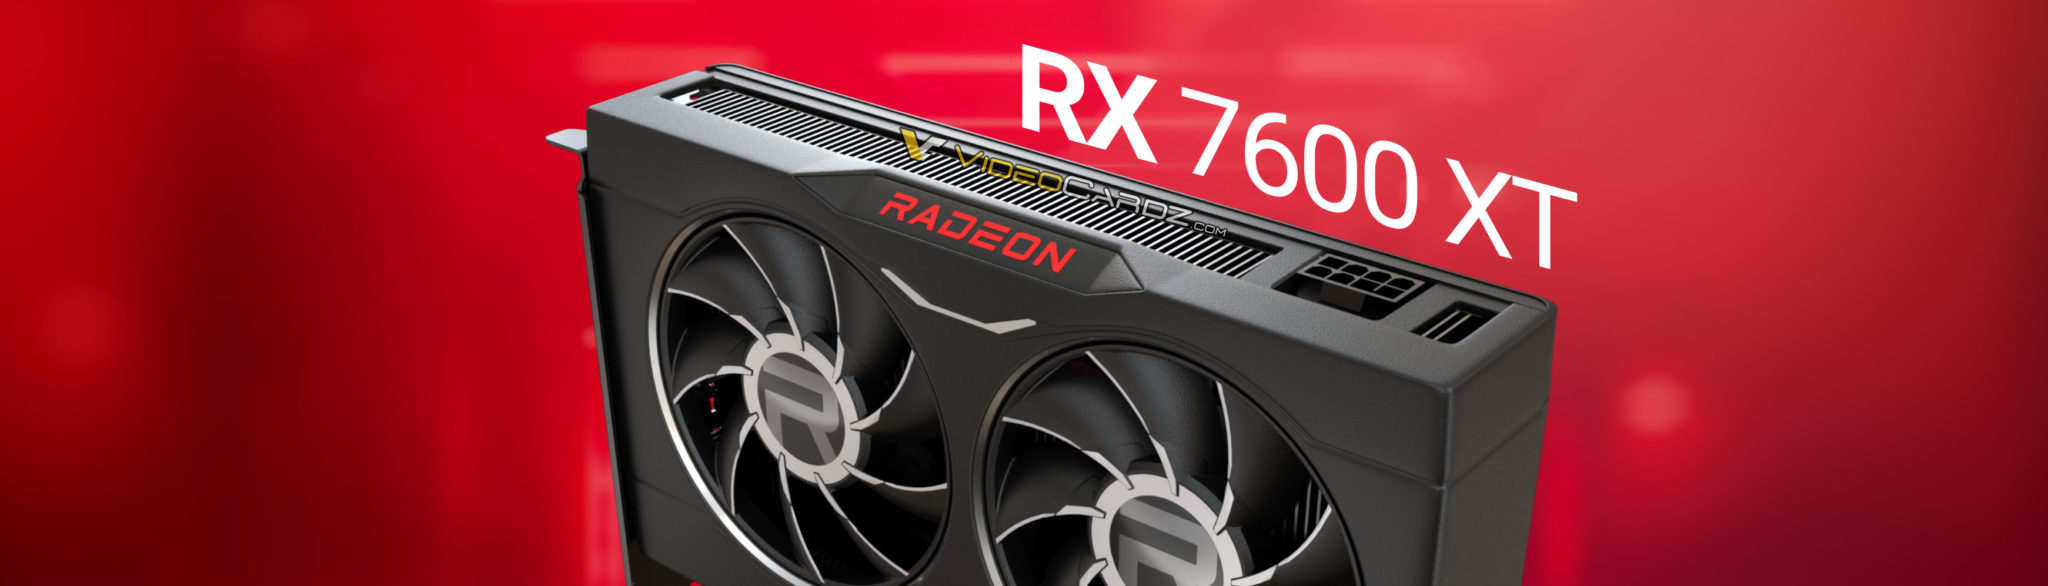 AMD-RX-7600-XT-HERO-BANNER-2048x586.jpg